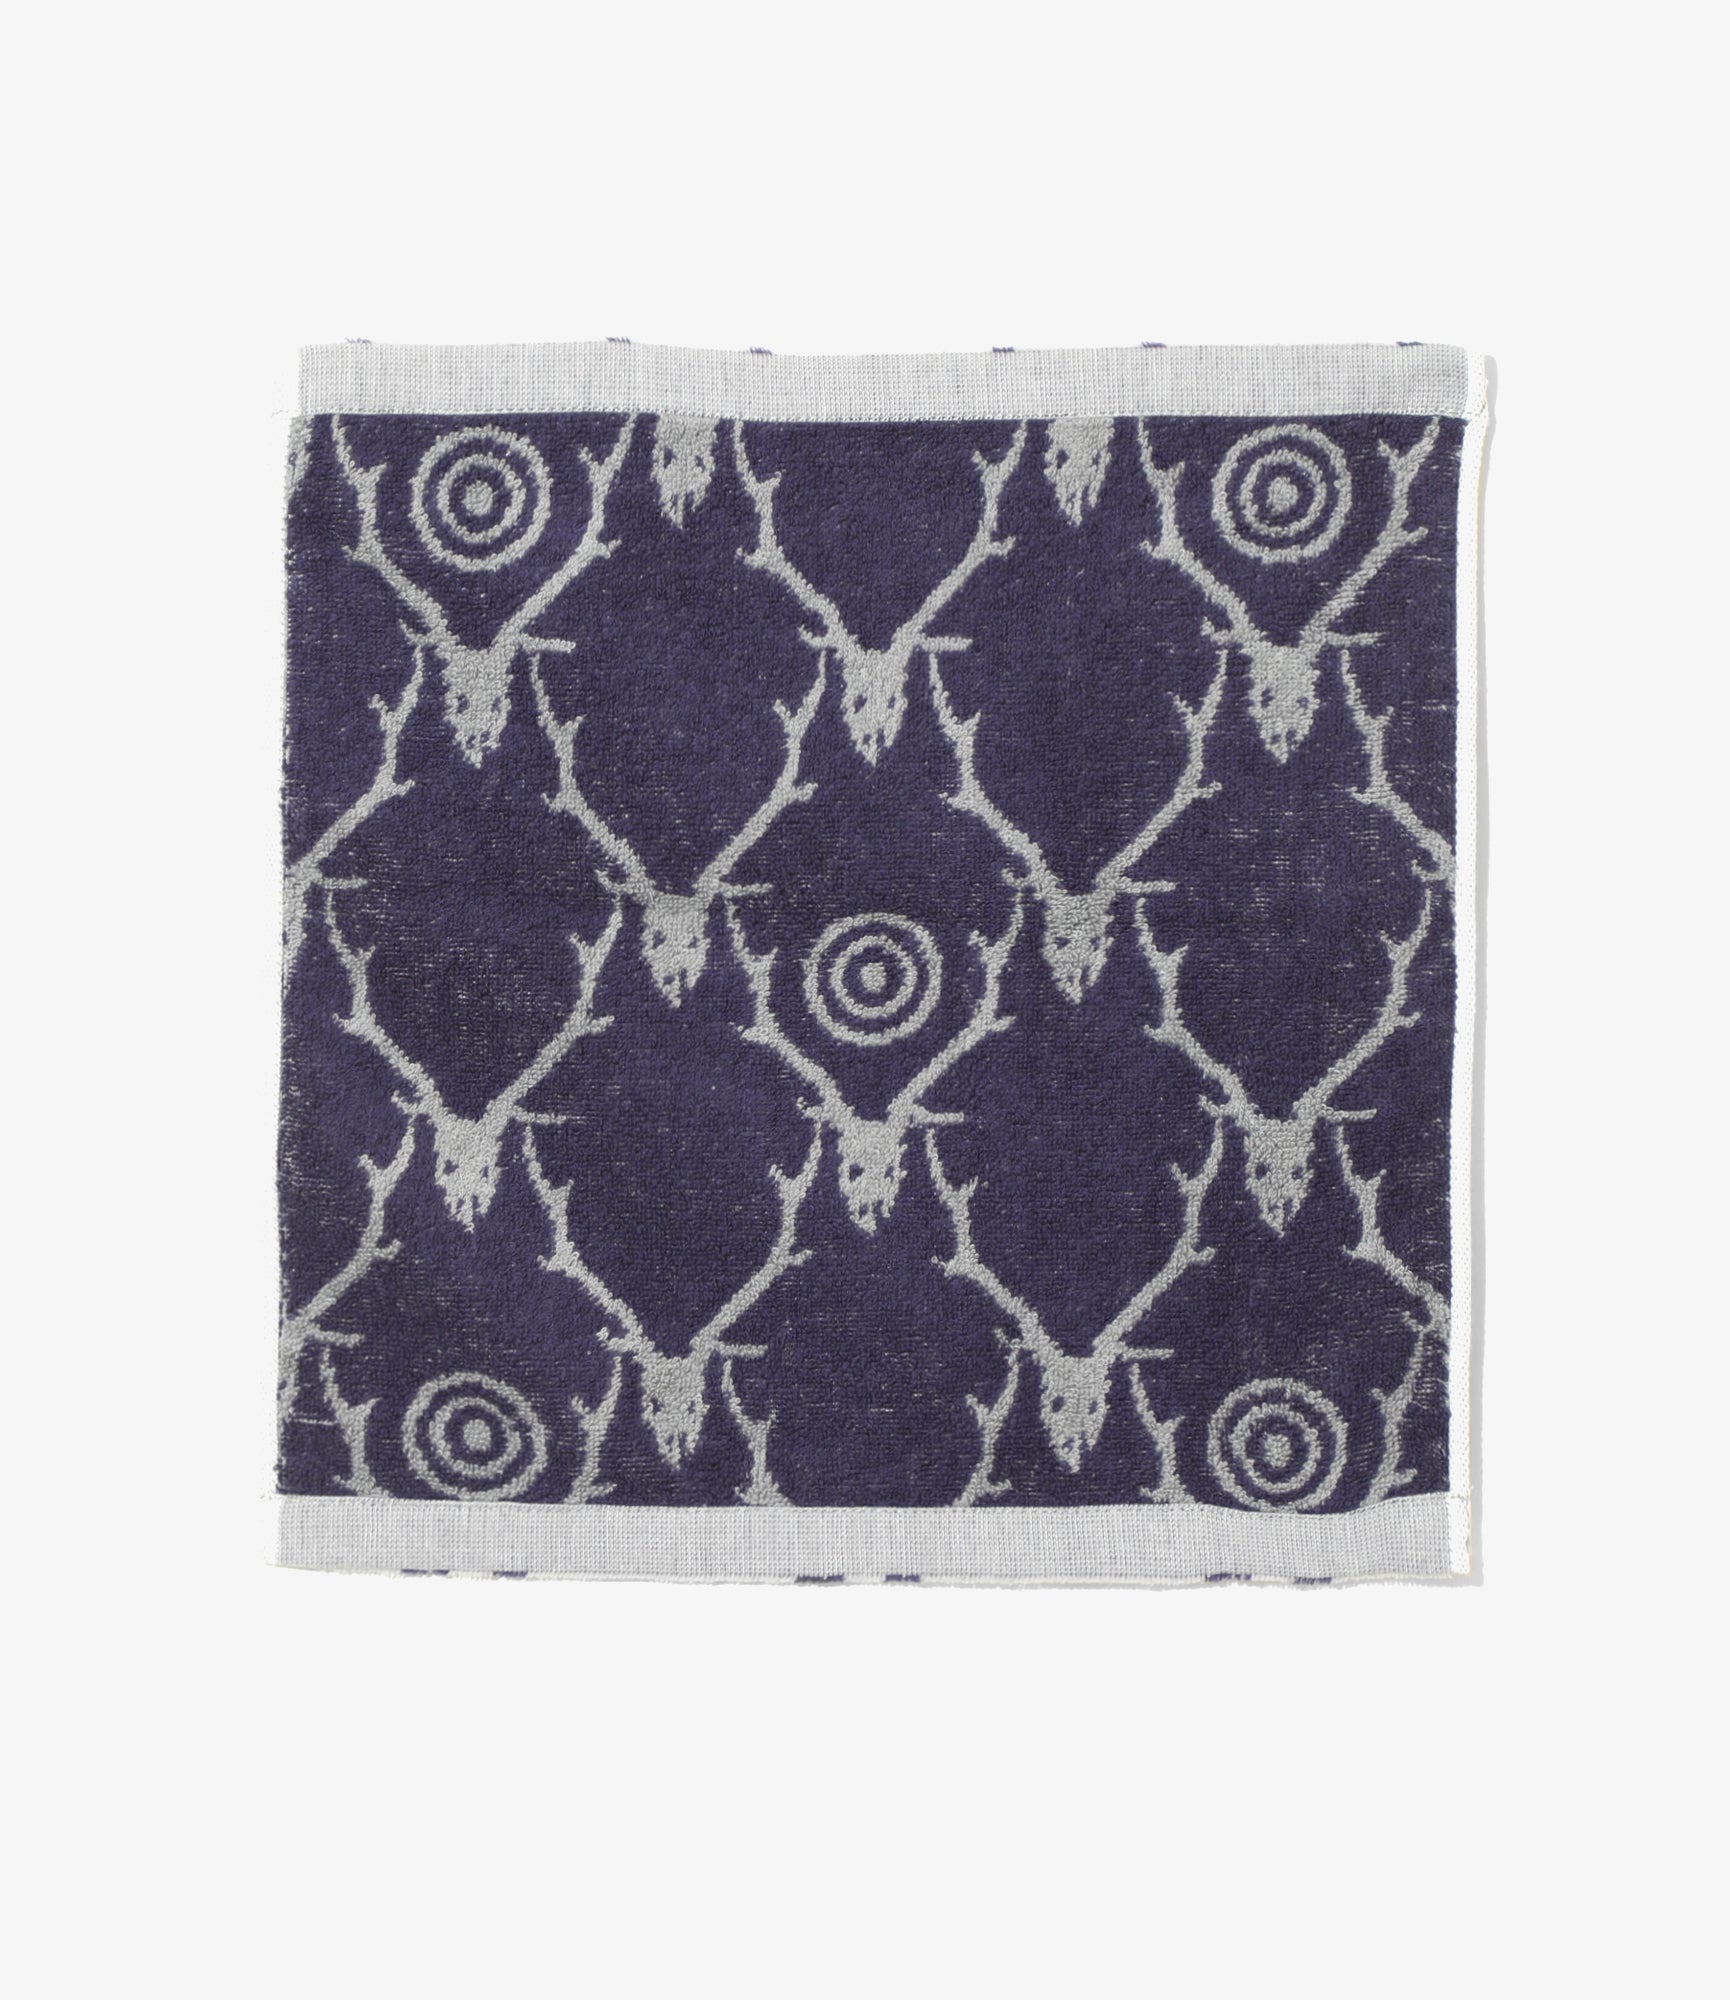 South2 West8 Wash Towel - Cotton Pile Jq. / Skull&Target - Grey/Purple